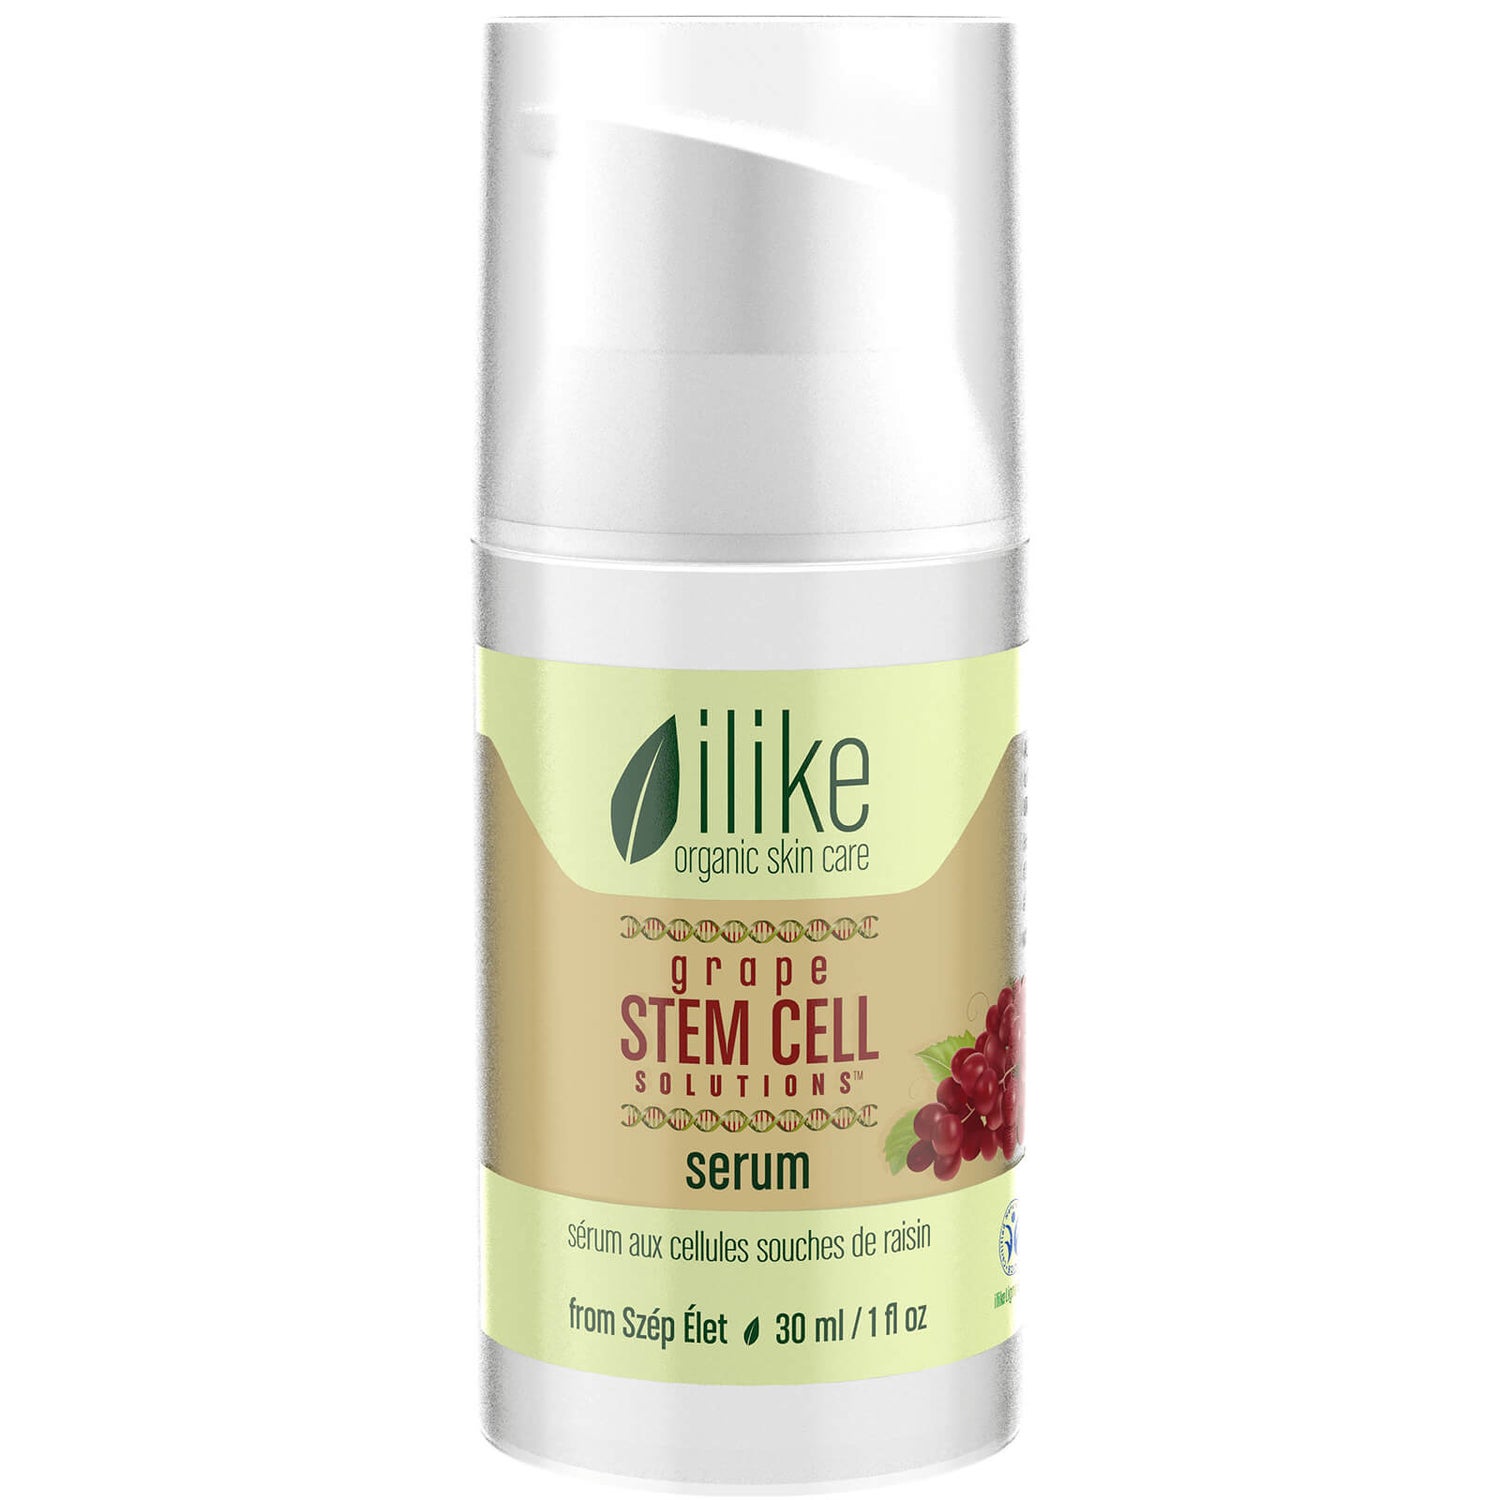 ilike organic skin care Grape Stem Cell Solutions Serum